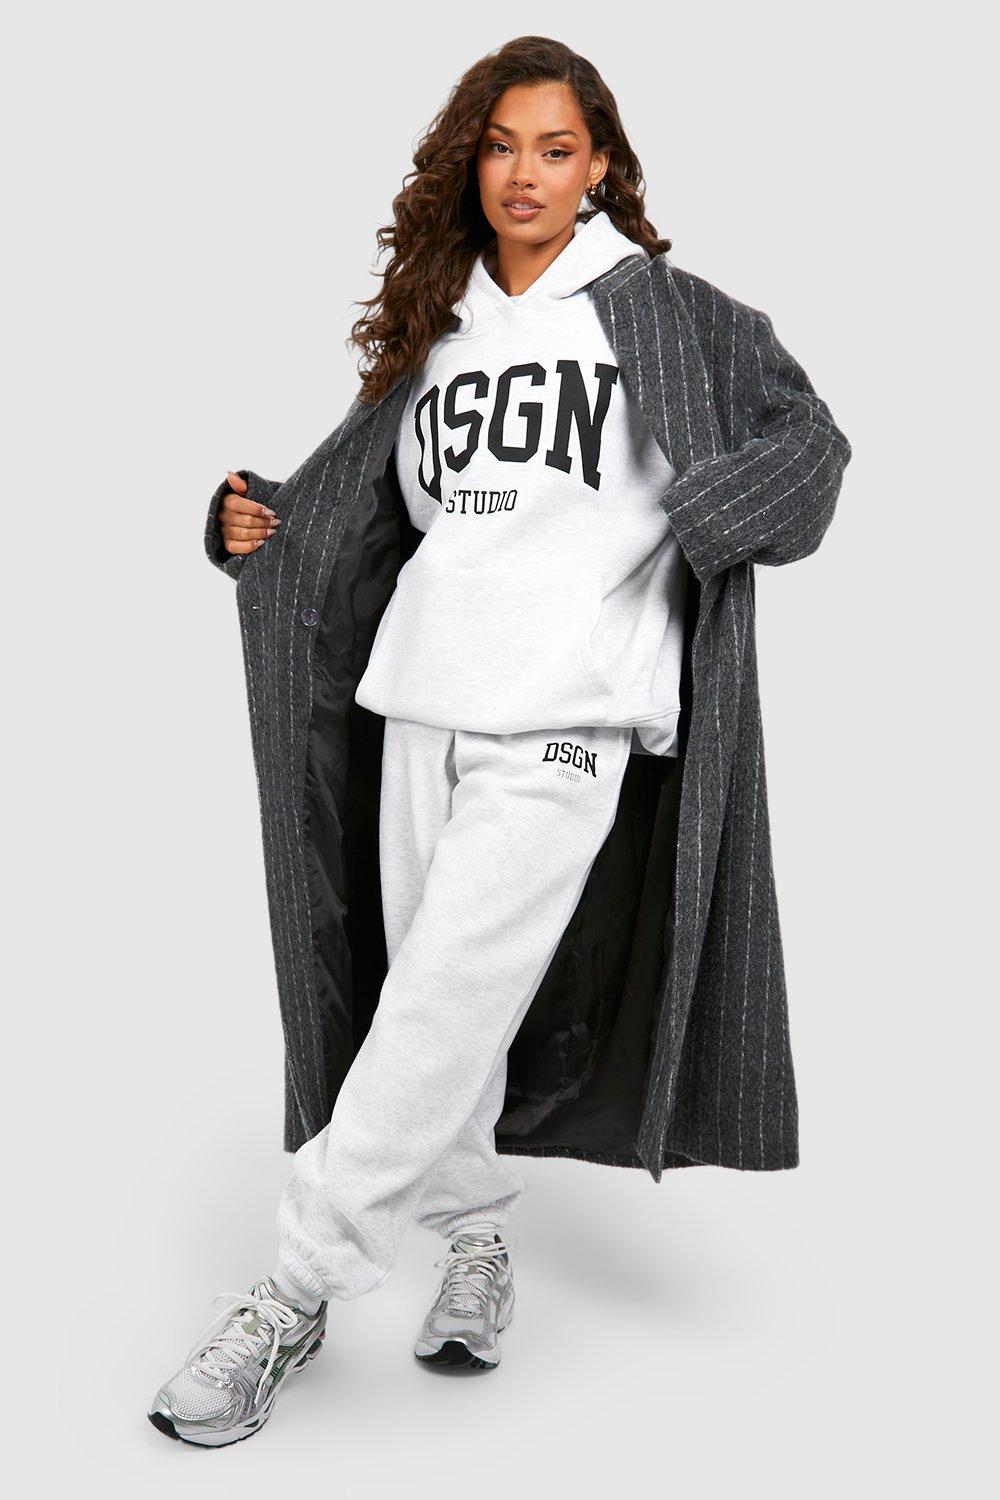 Dsgn Studio Wardrobe Essentials Slogan Hooded Tracksuit